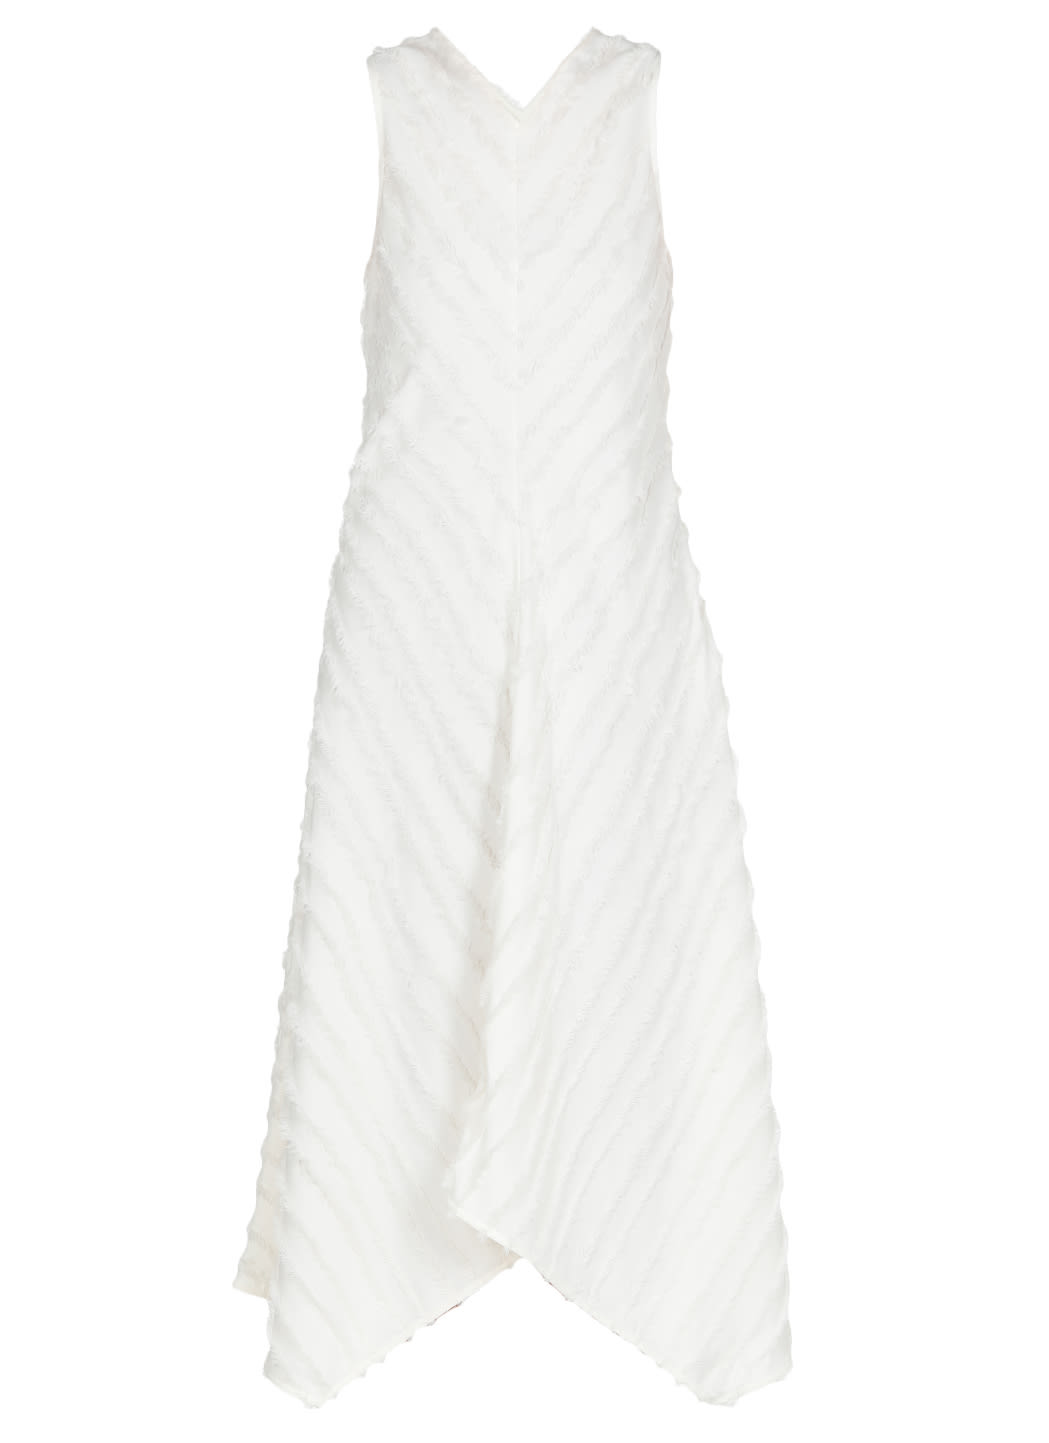 Proenza Schouler White Label Fringe Fil Coup·Dress